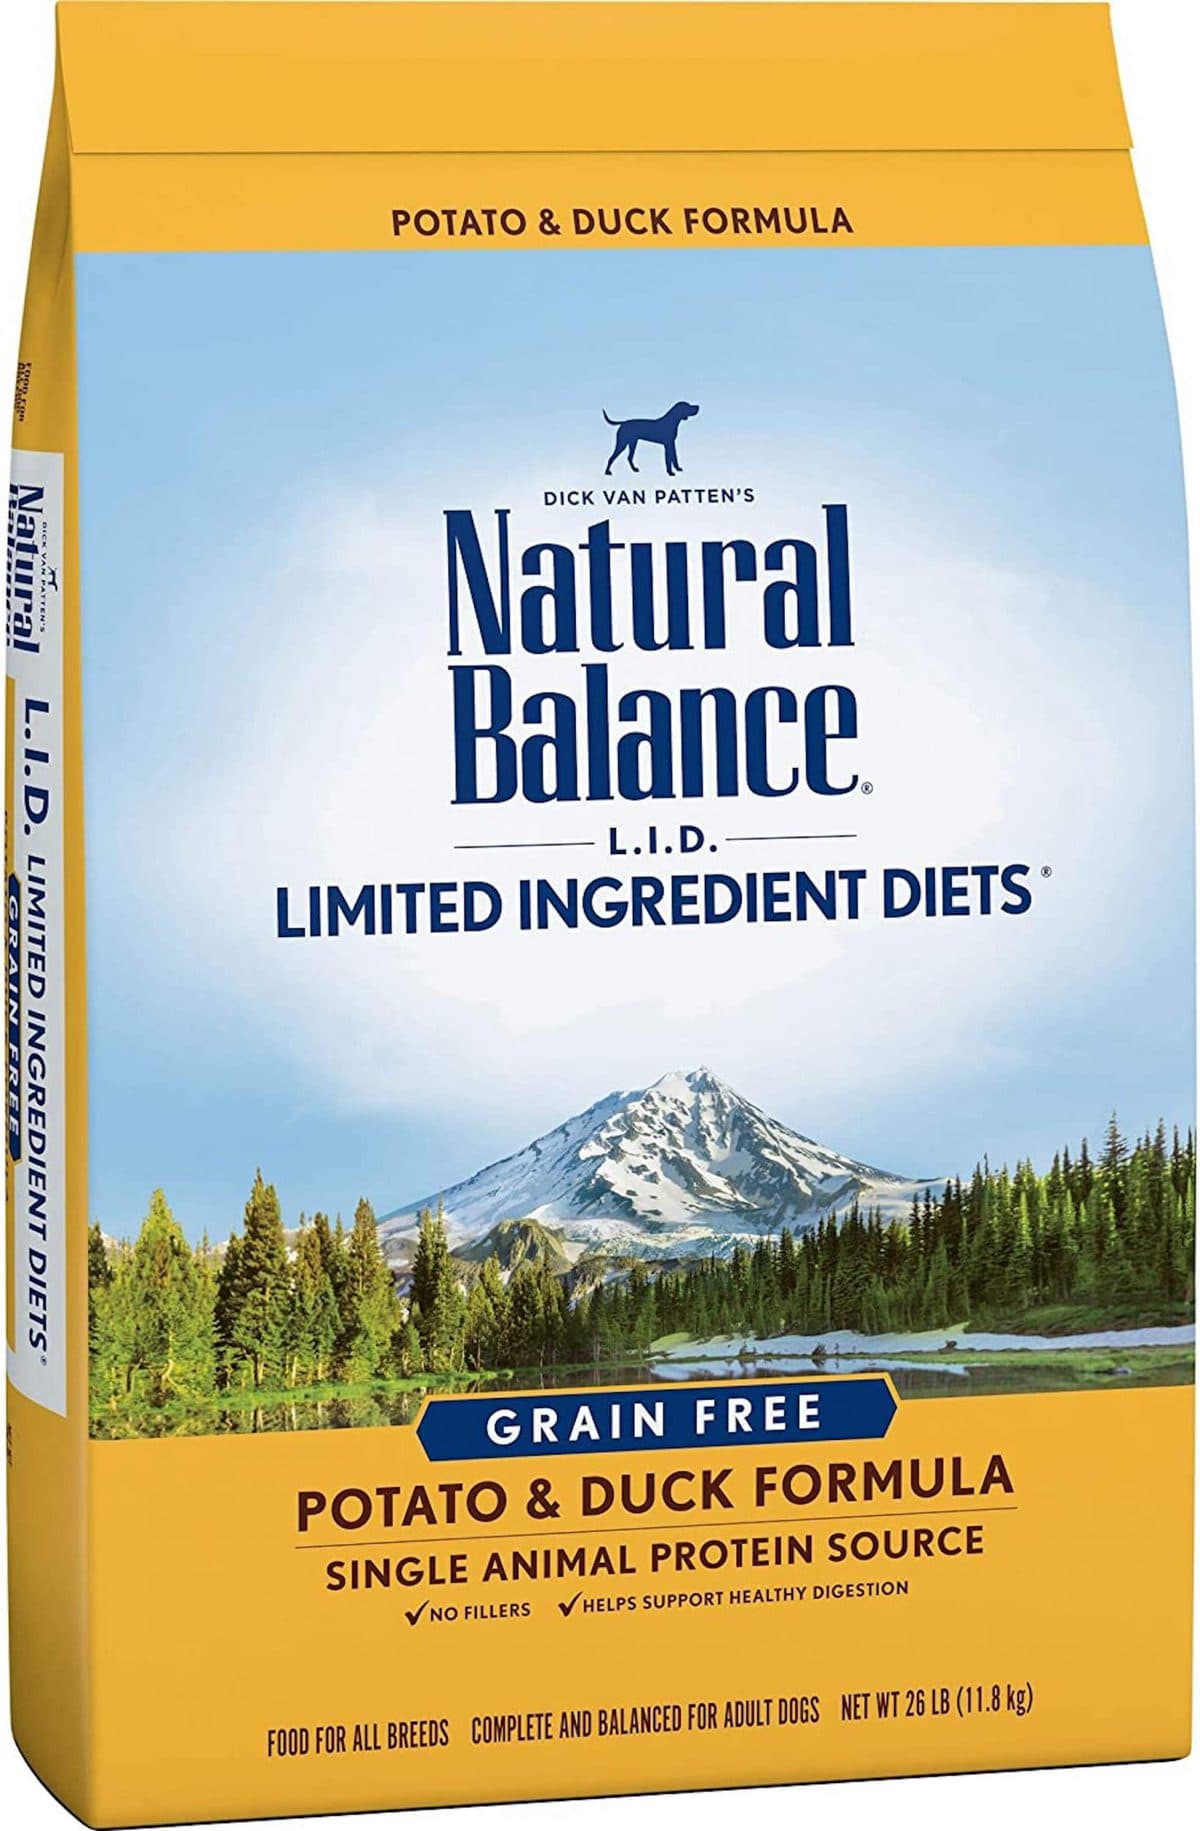 Natural Balance Limited Ingredient Dry Dog Food - Potato & Duck Formula